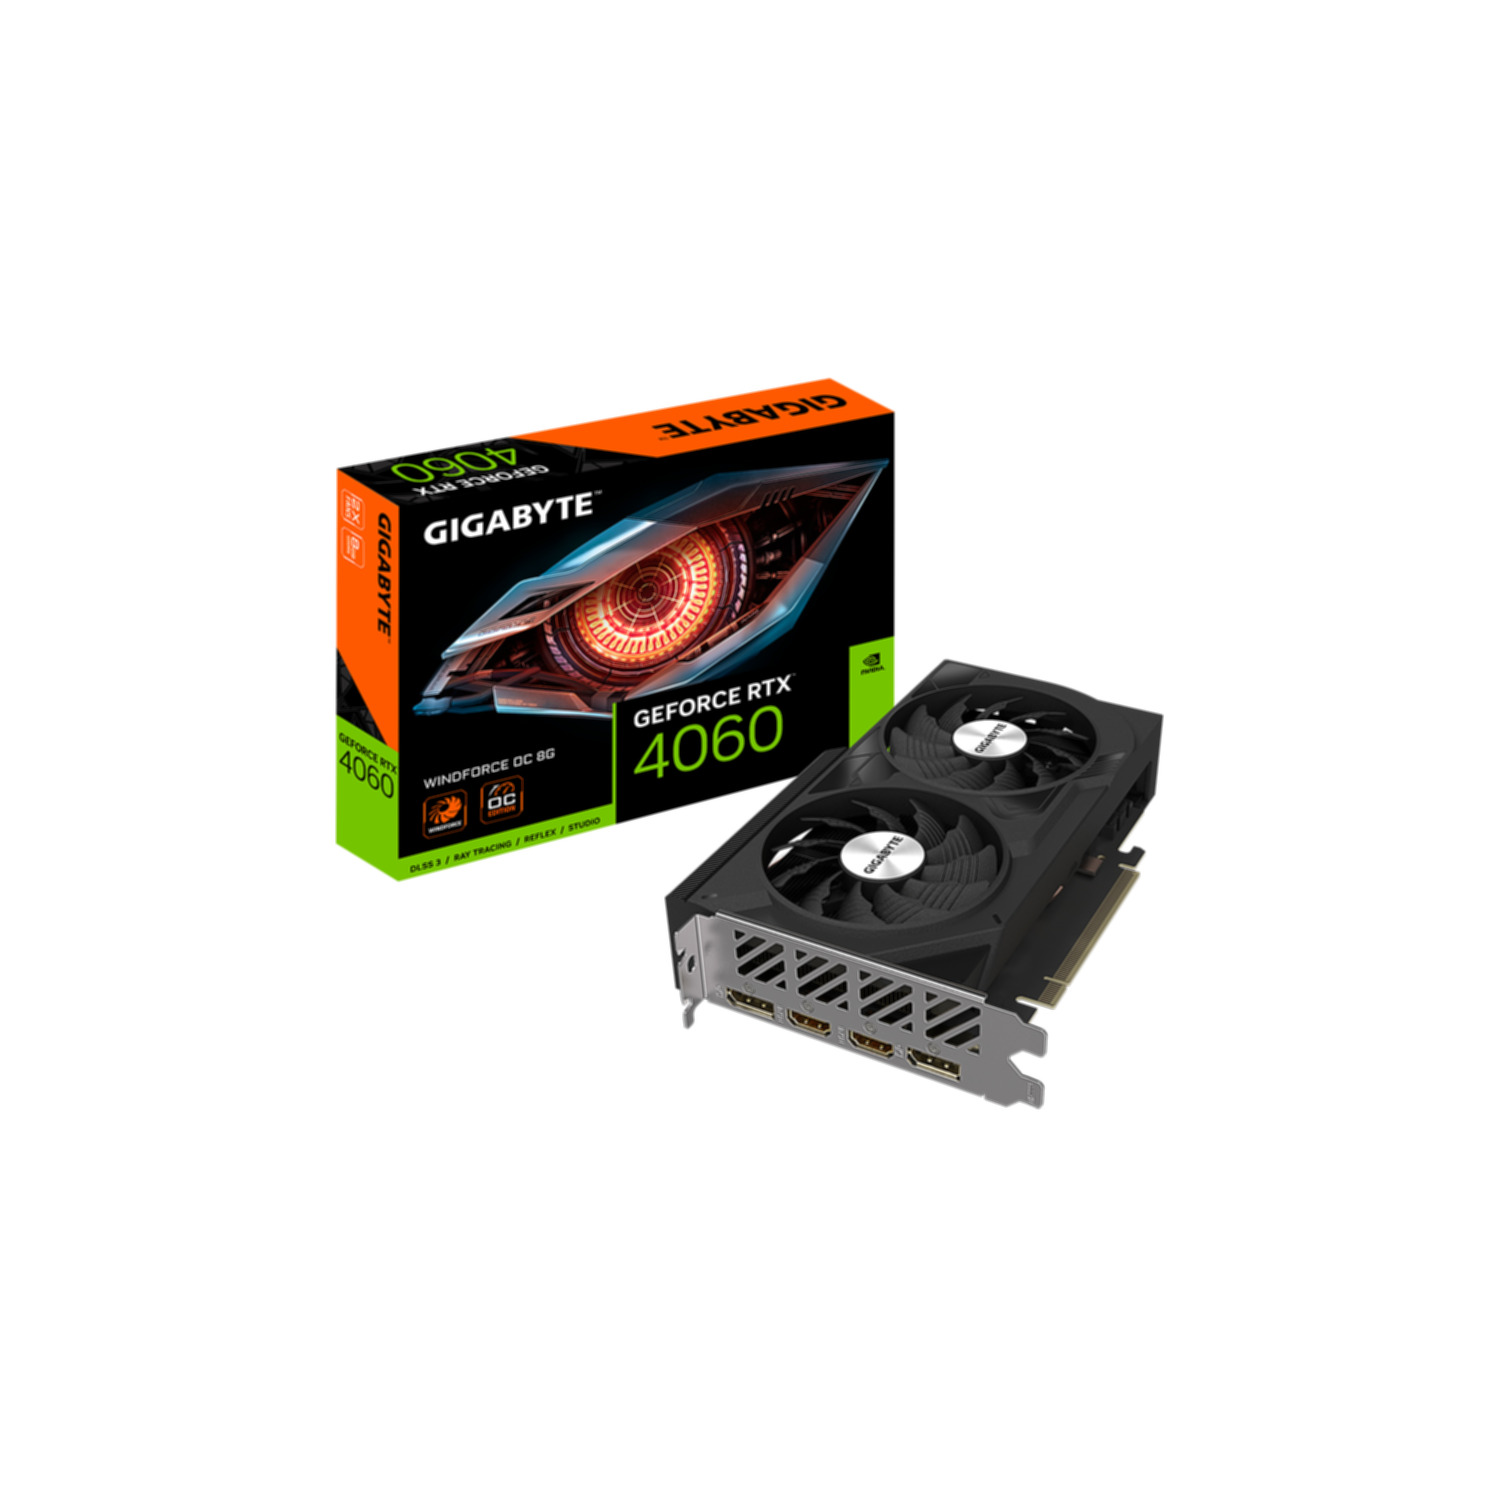 GeForce 8G GIGABYTE OC Grafikkarte) RTX (NVIDIA, WINDFORCE 4060